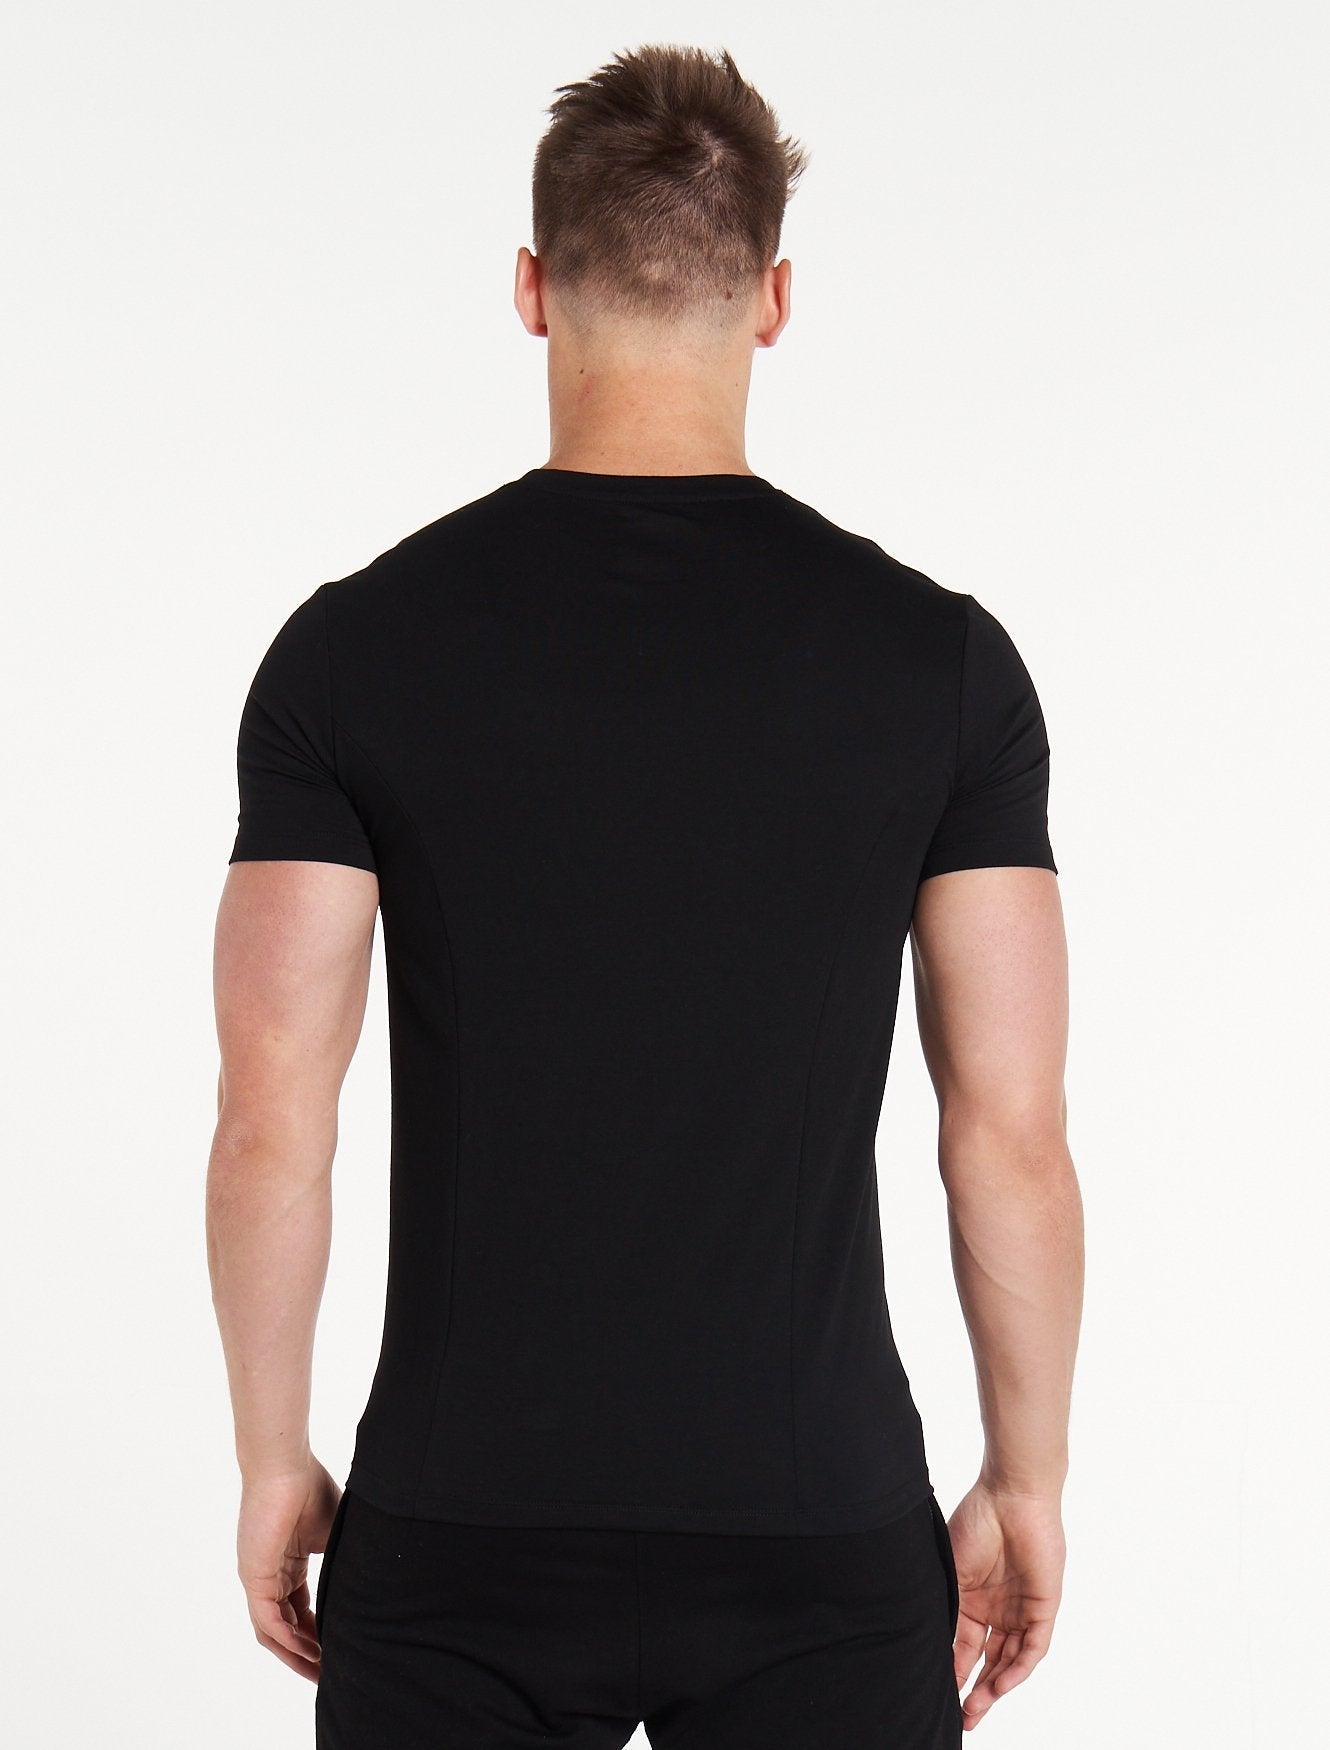 Essential T-Shirt / Black Pursue Fitness 3